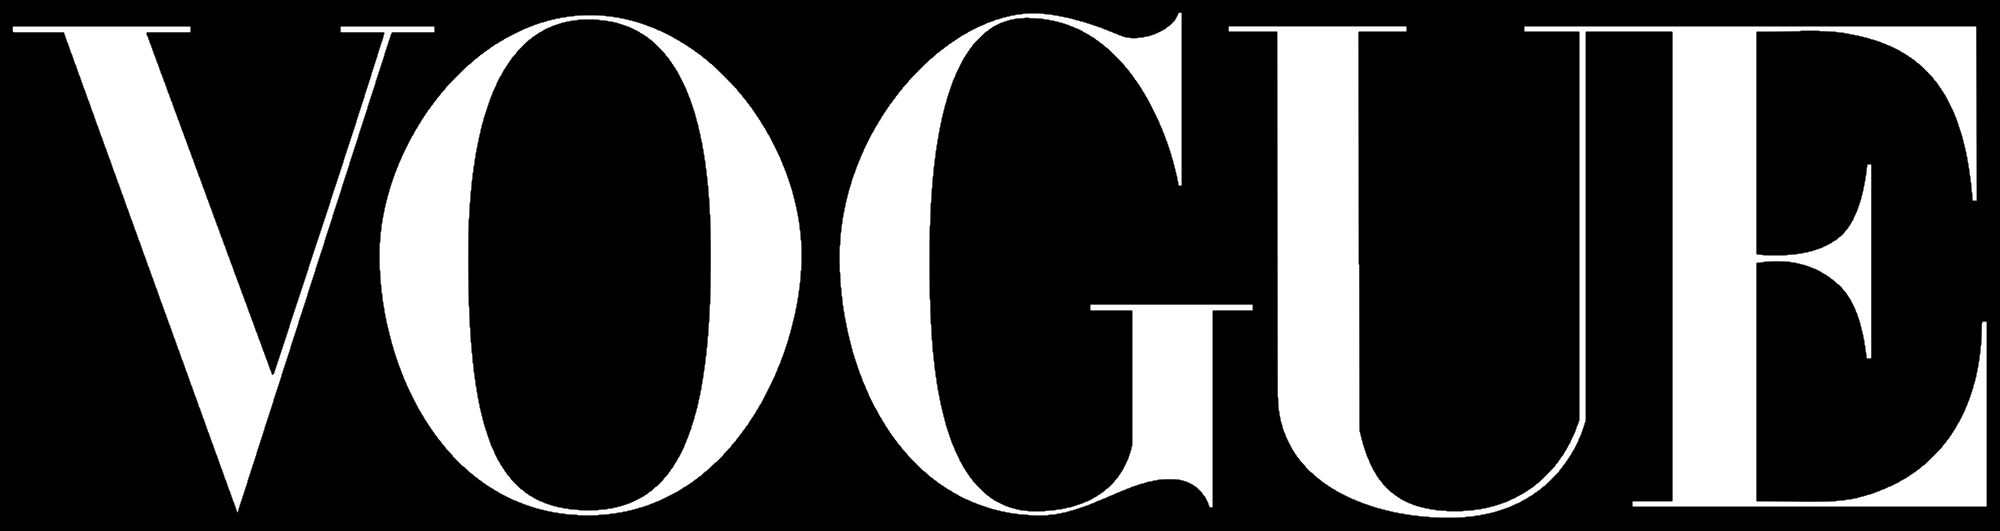 Vogue White Logo - LogoDix